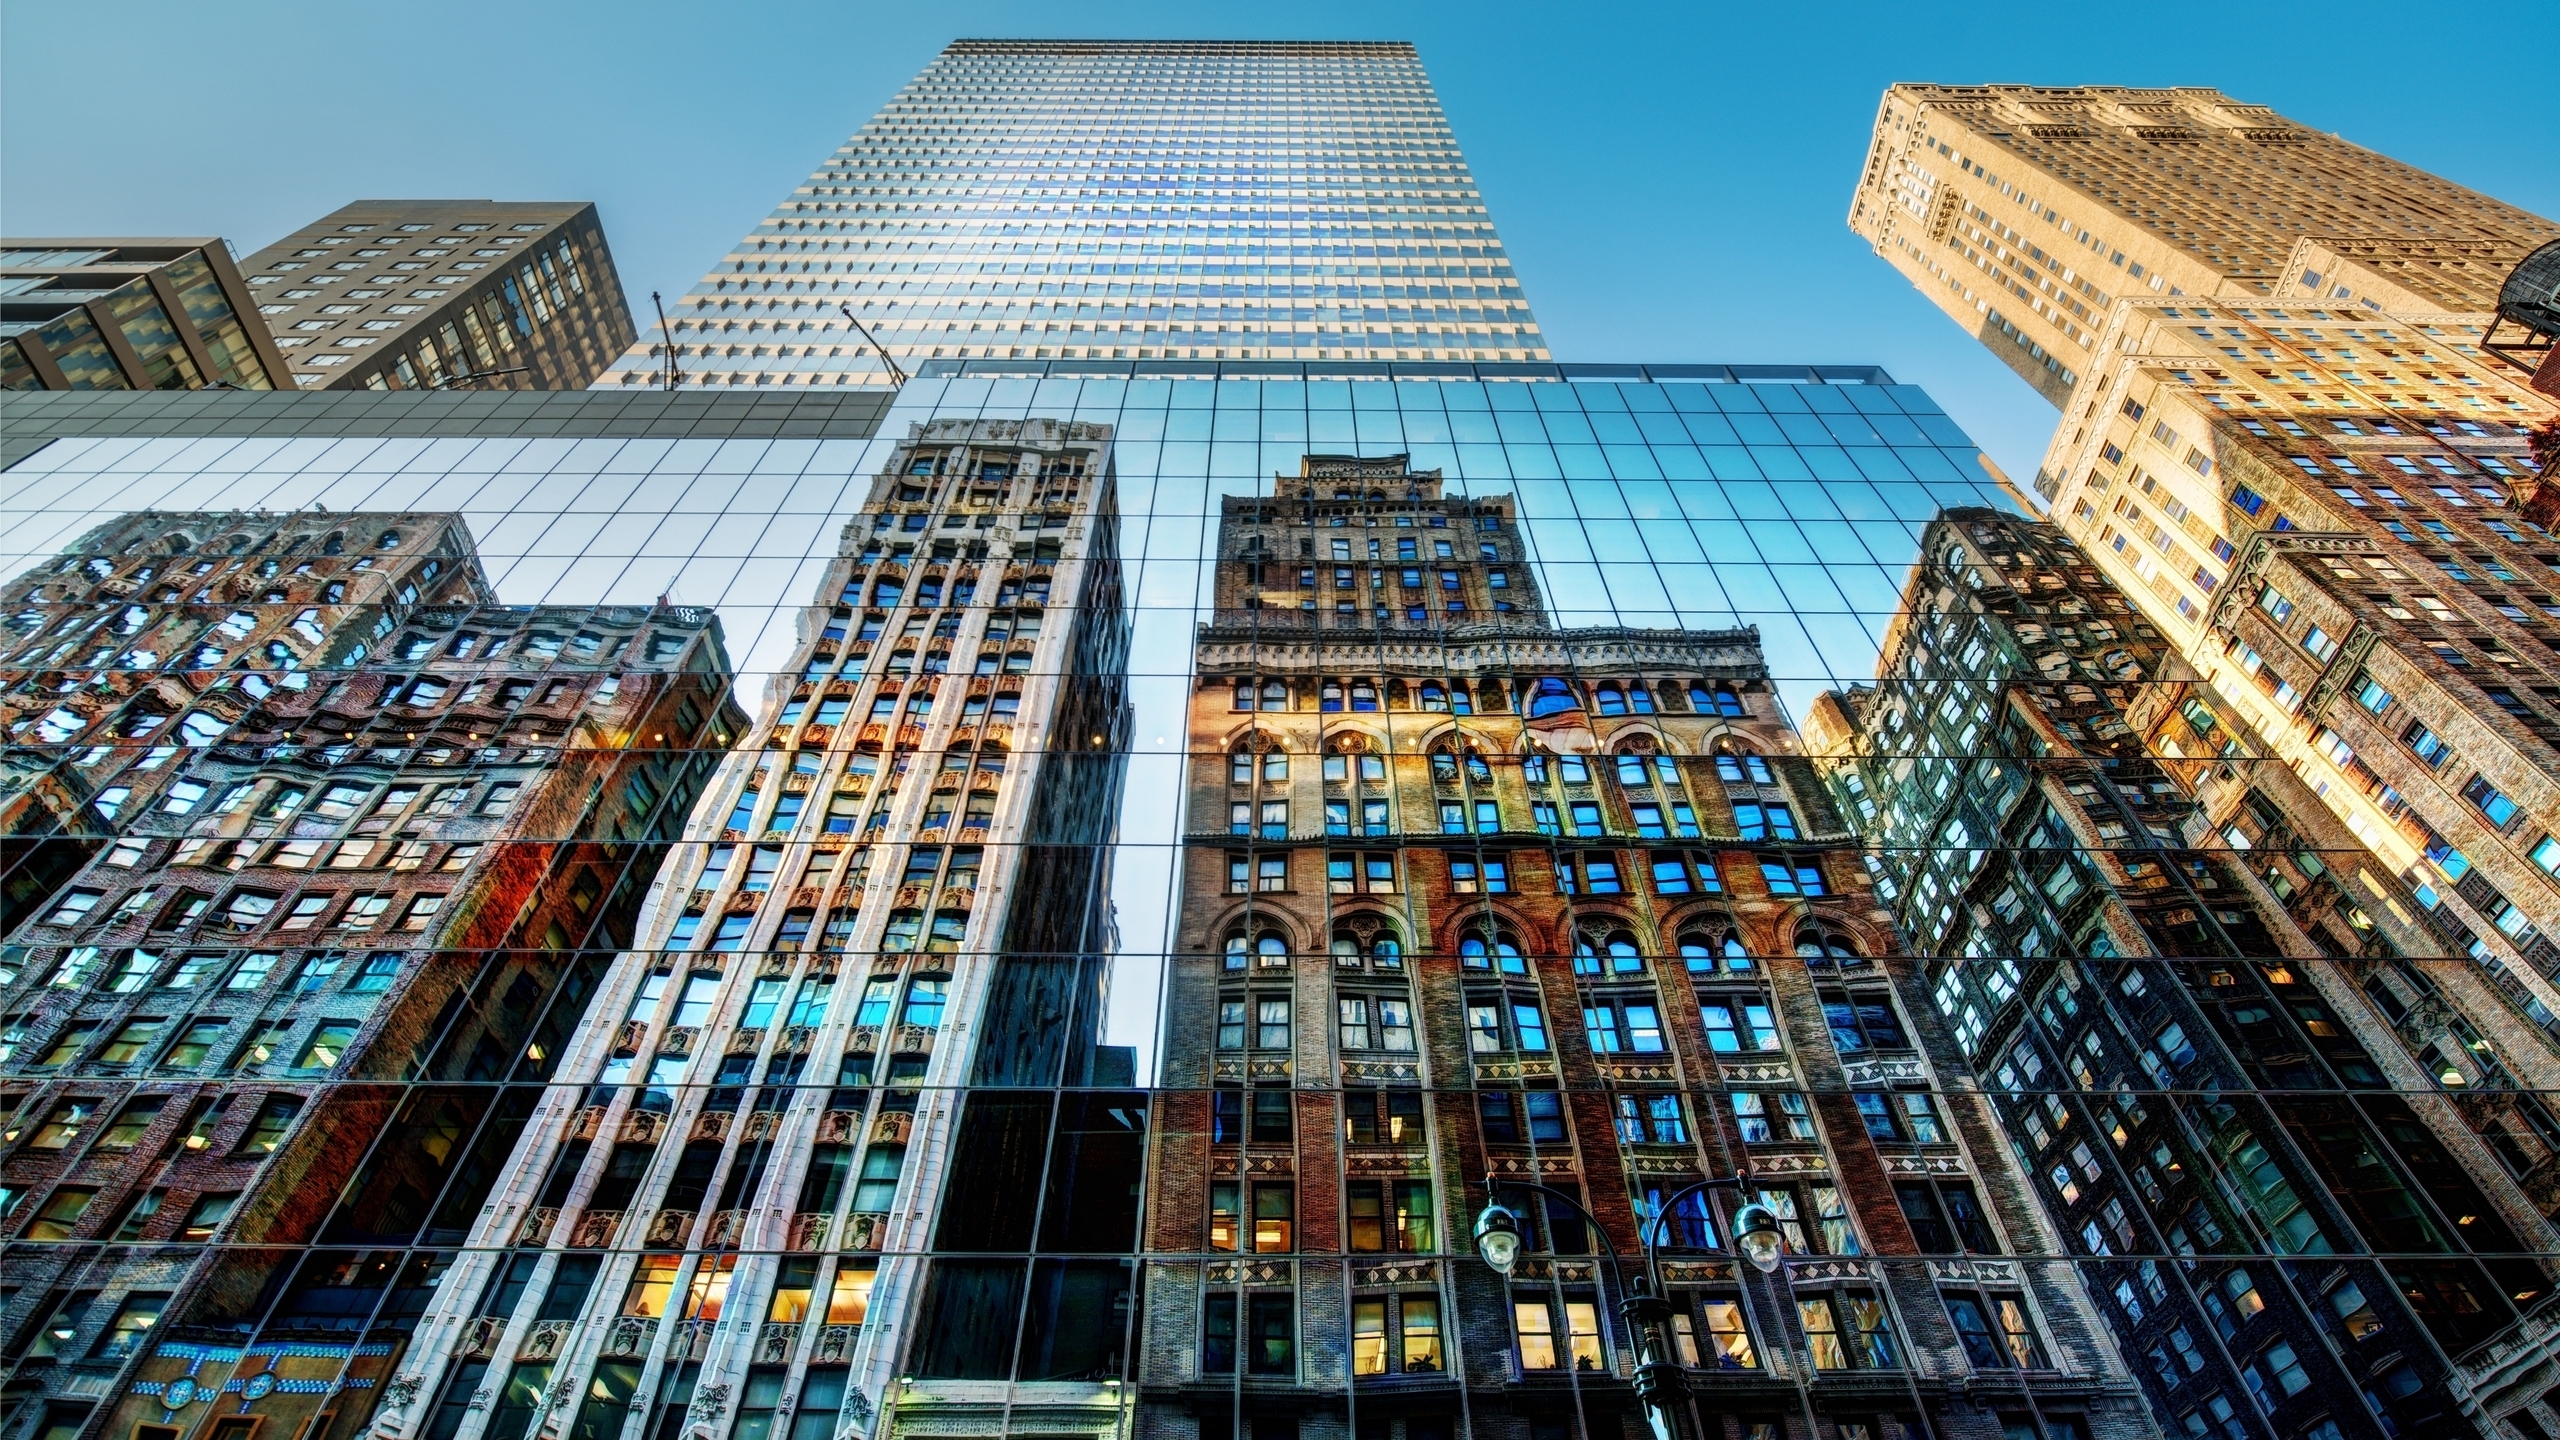 New York City Buildings for 2560x1440 HDTV resolution